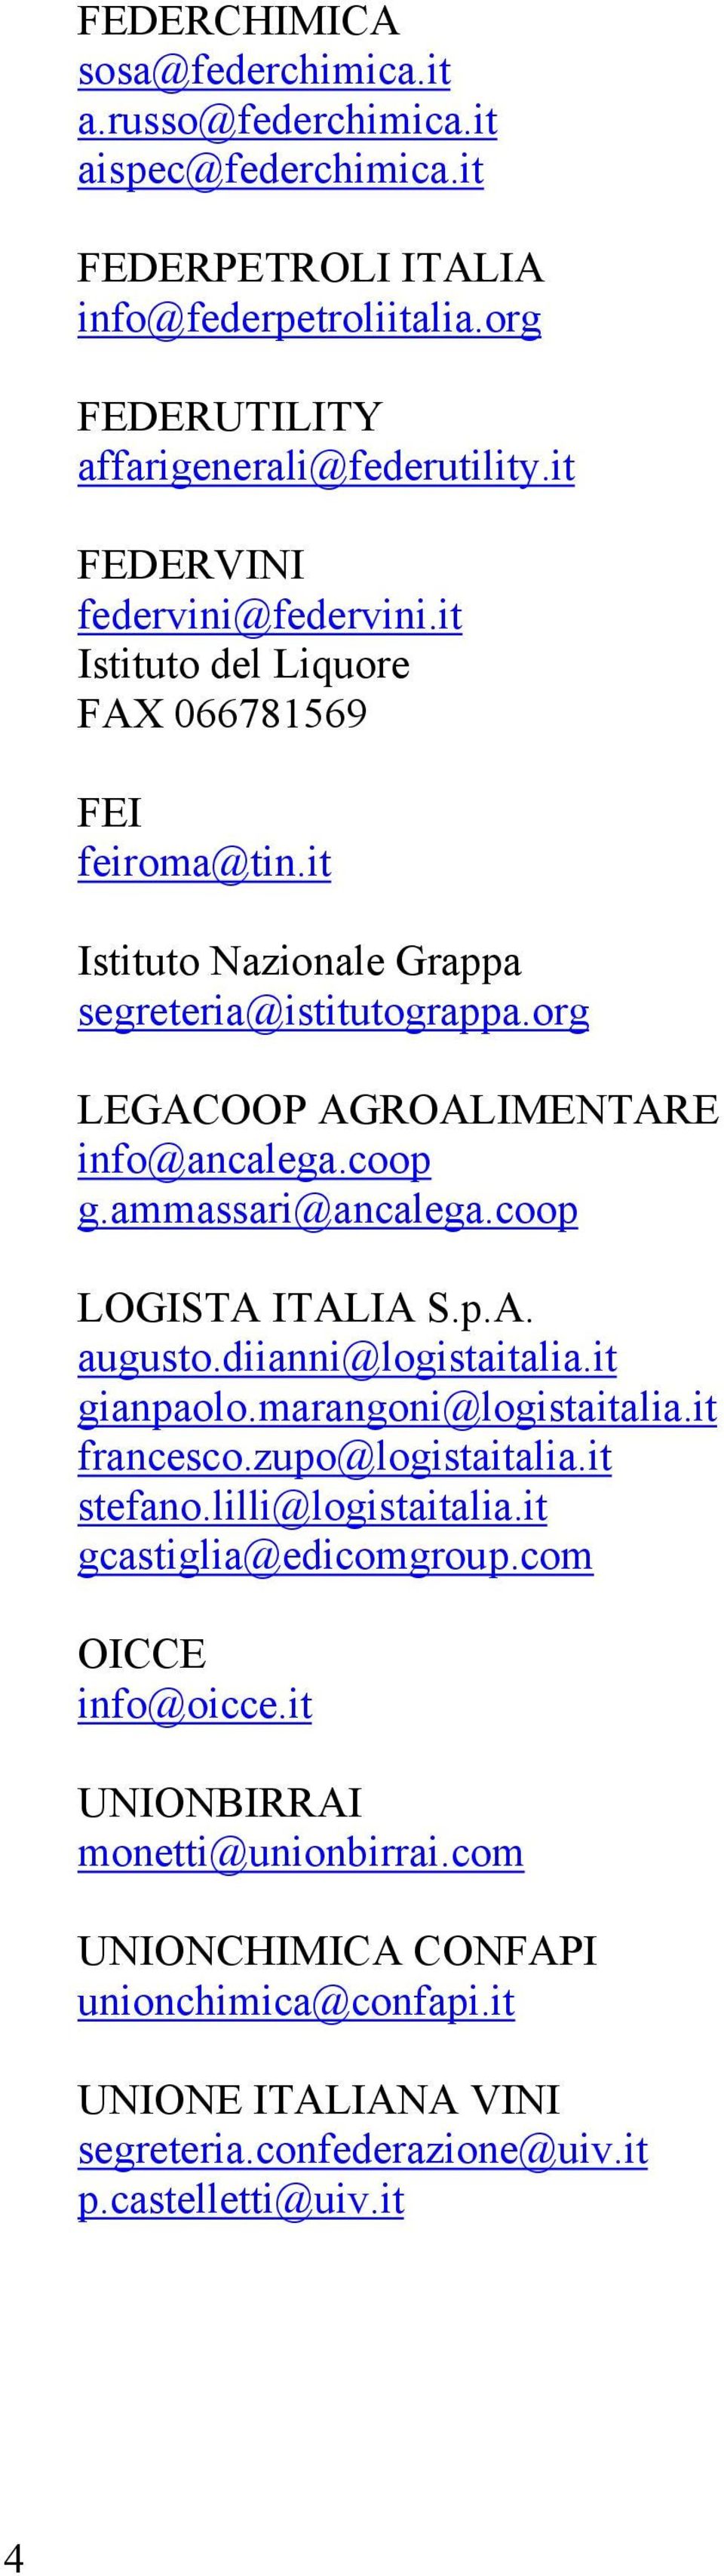 coop g.ammassari@ancalega.coop LOGISTA ITALIA S.p.A. augusto.diianni@logistaitalia.it gianpaolo.marangoni@logistaitalia.it francesco.zupo@logistaitalia.it stefano.lilli@logistaitalia.